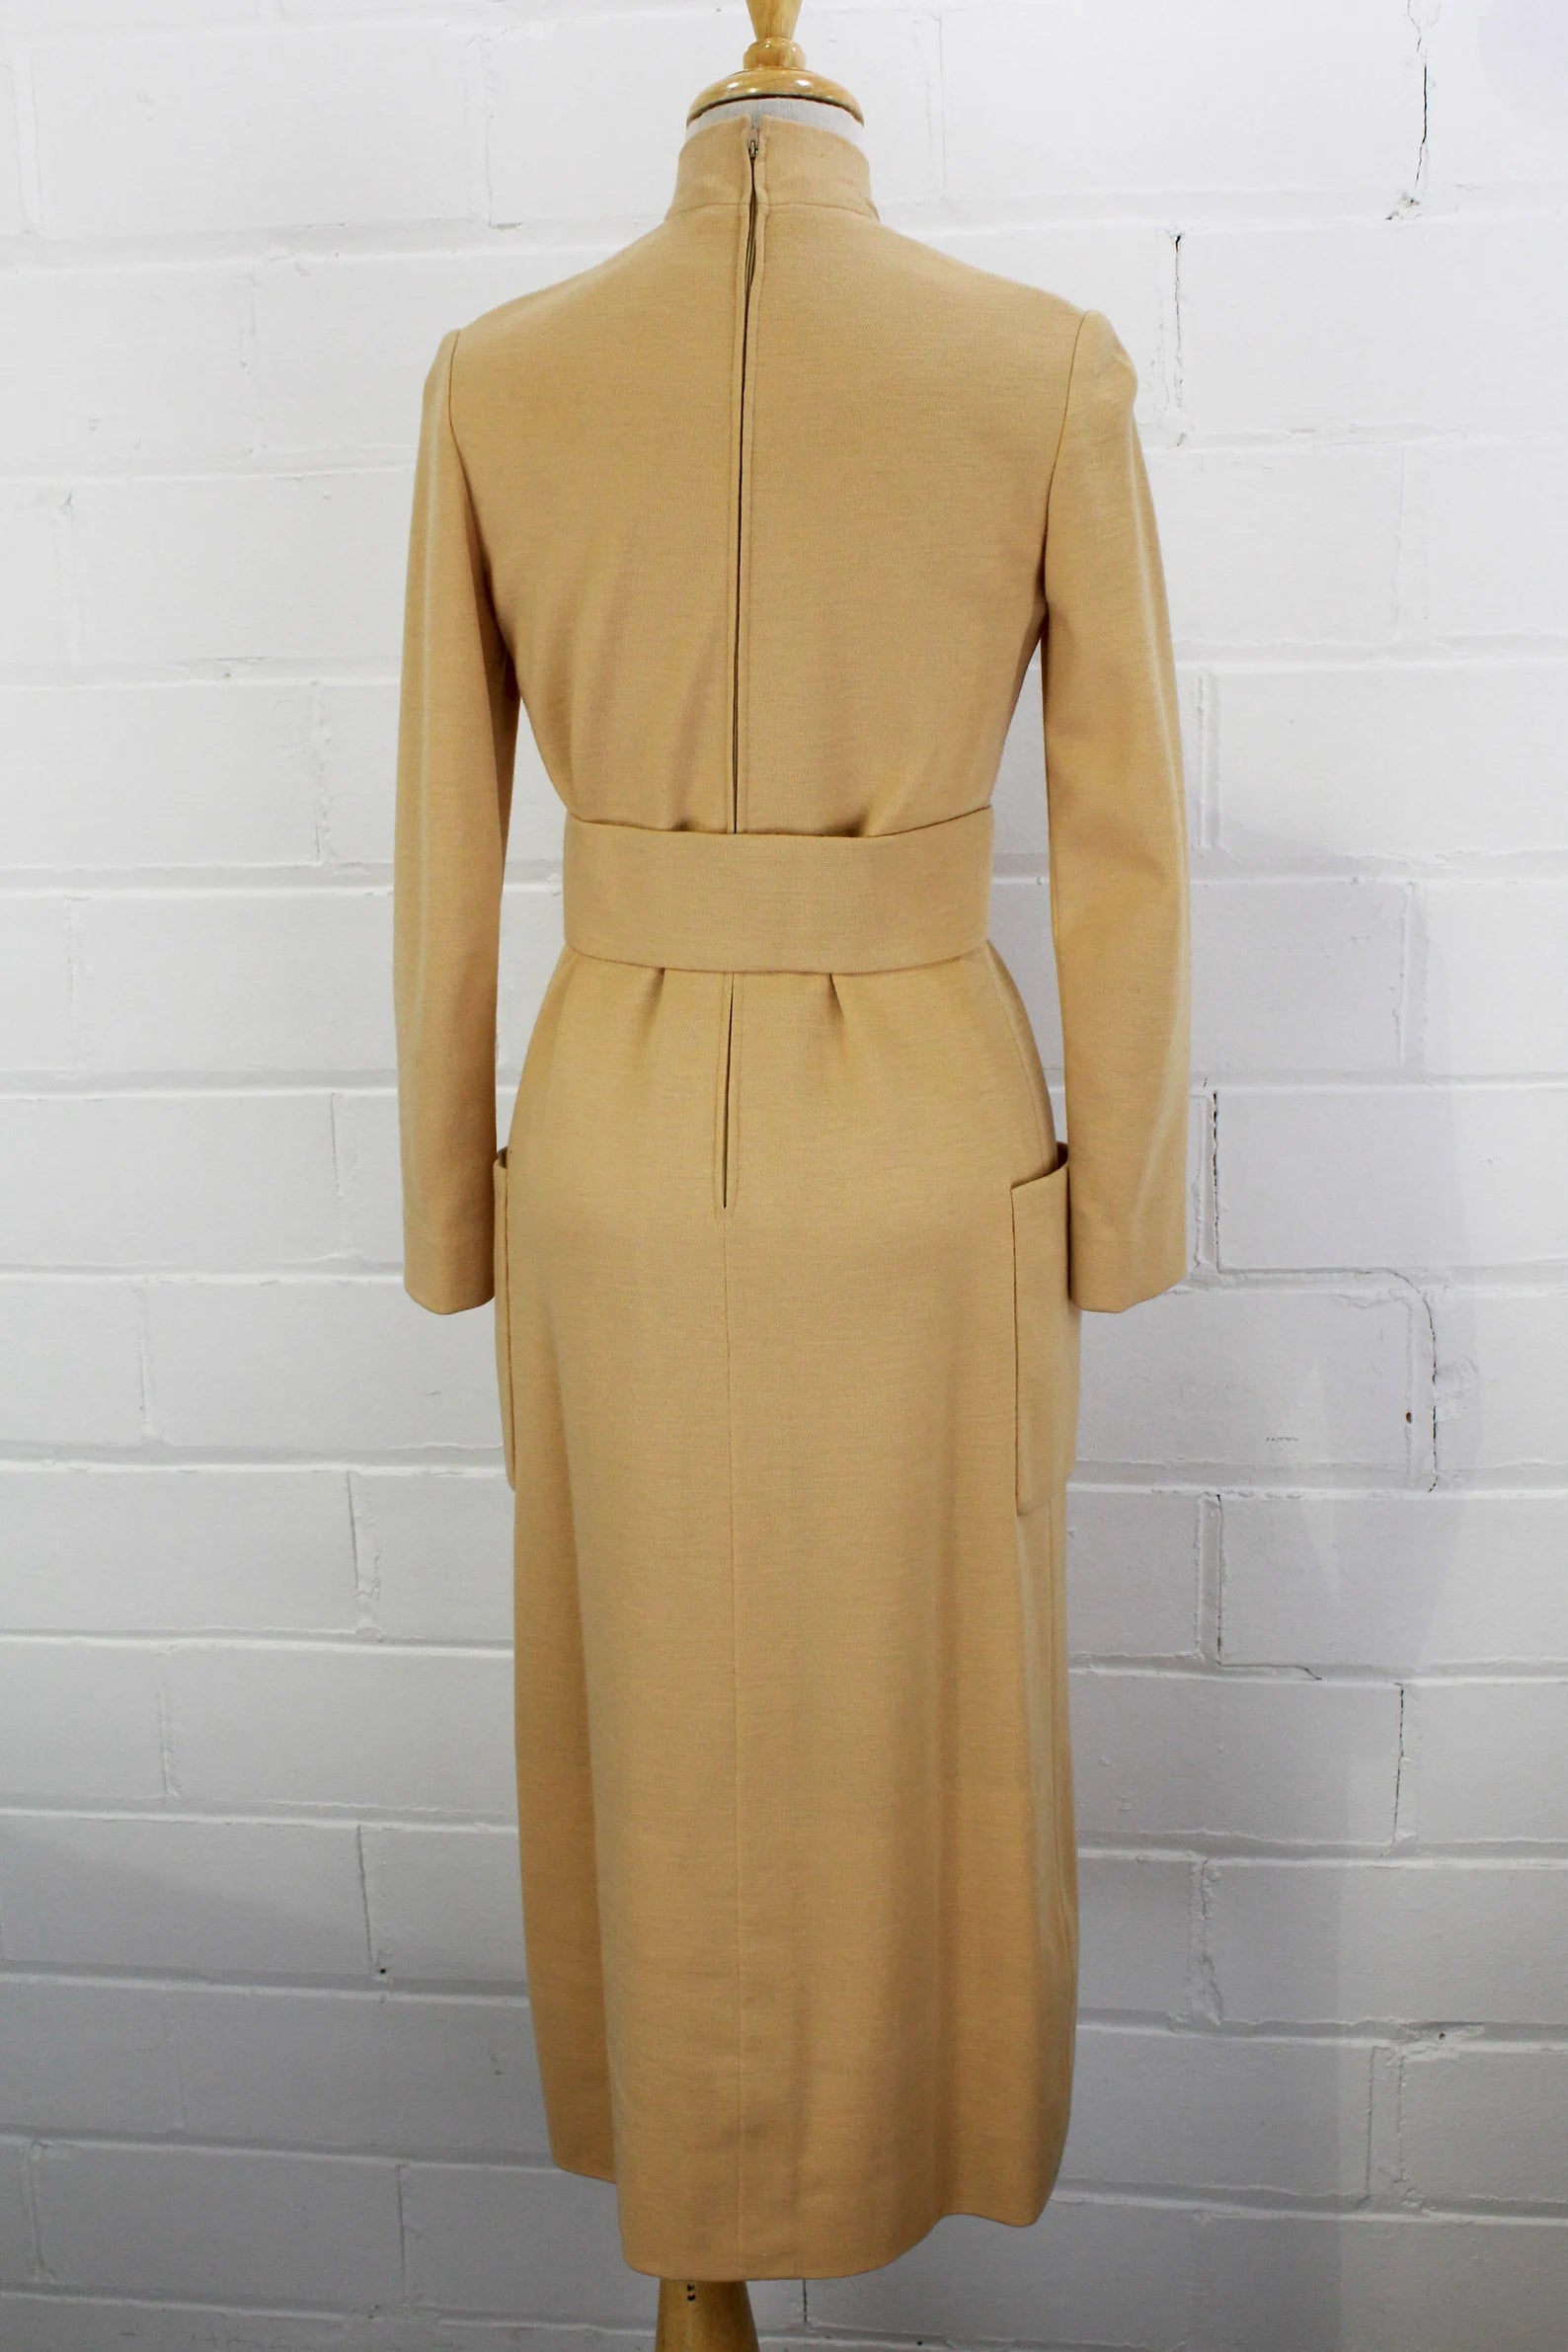 1970s Norman Norell Stand Collar Day Dress, Light Camel Long Sleeve Wool Belted Secretary Dress, Vintage Designer Dress W/ Pockets W28"